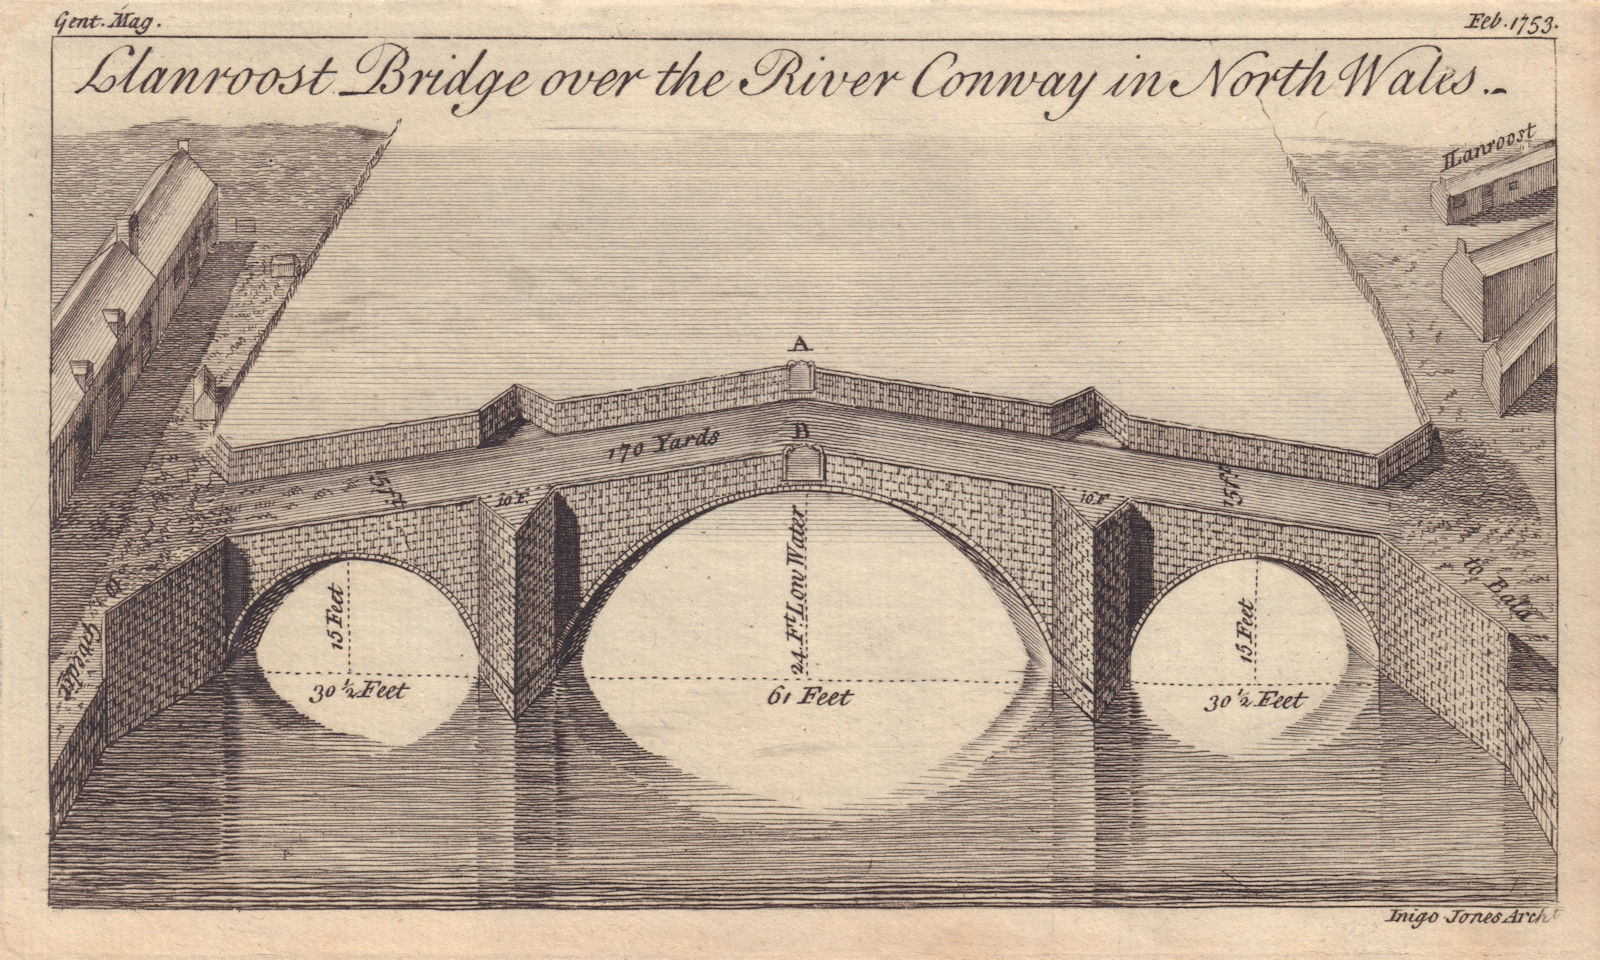 Associate Product Llanroost Bridge over the River Conway. Pont Fawr, Llanrwst. Inigo Jones 1753